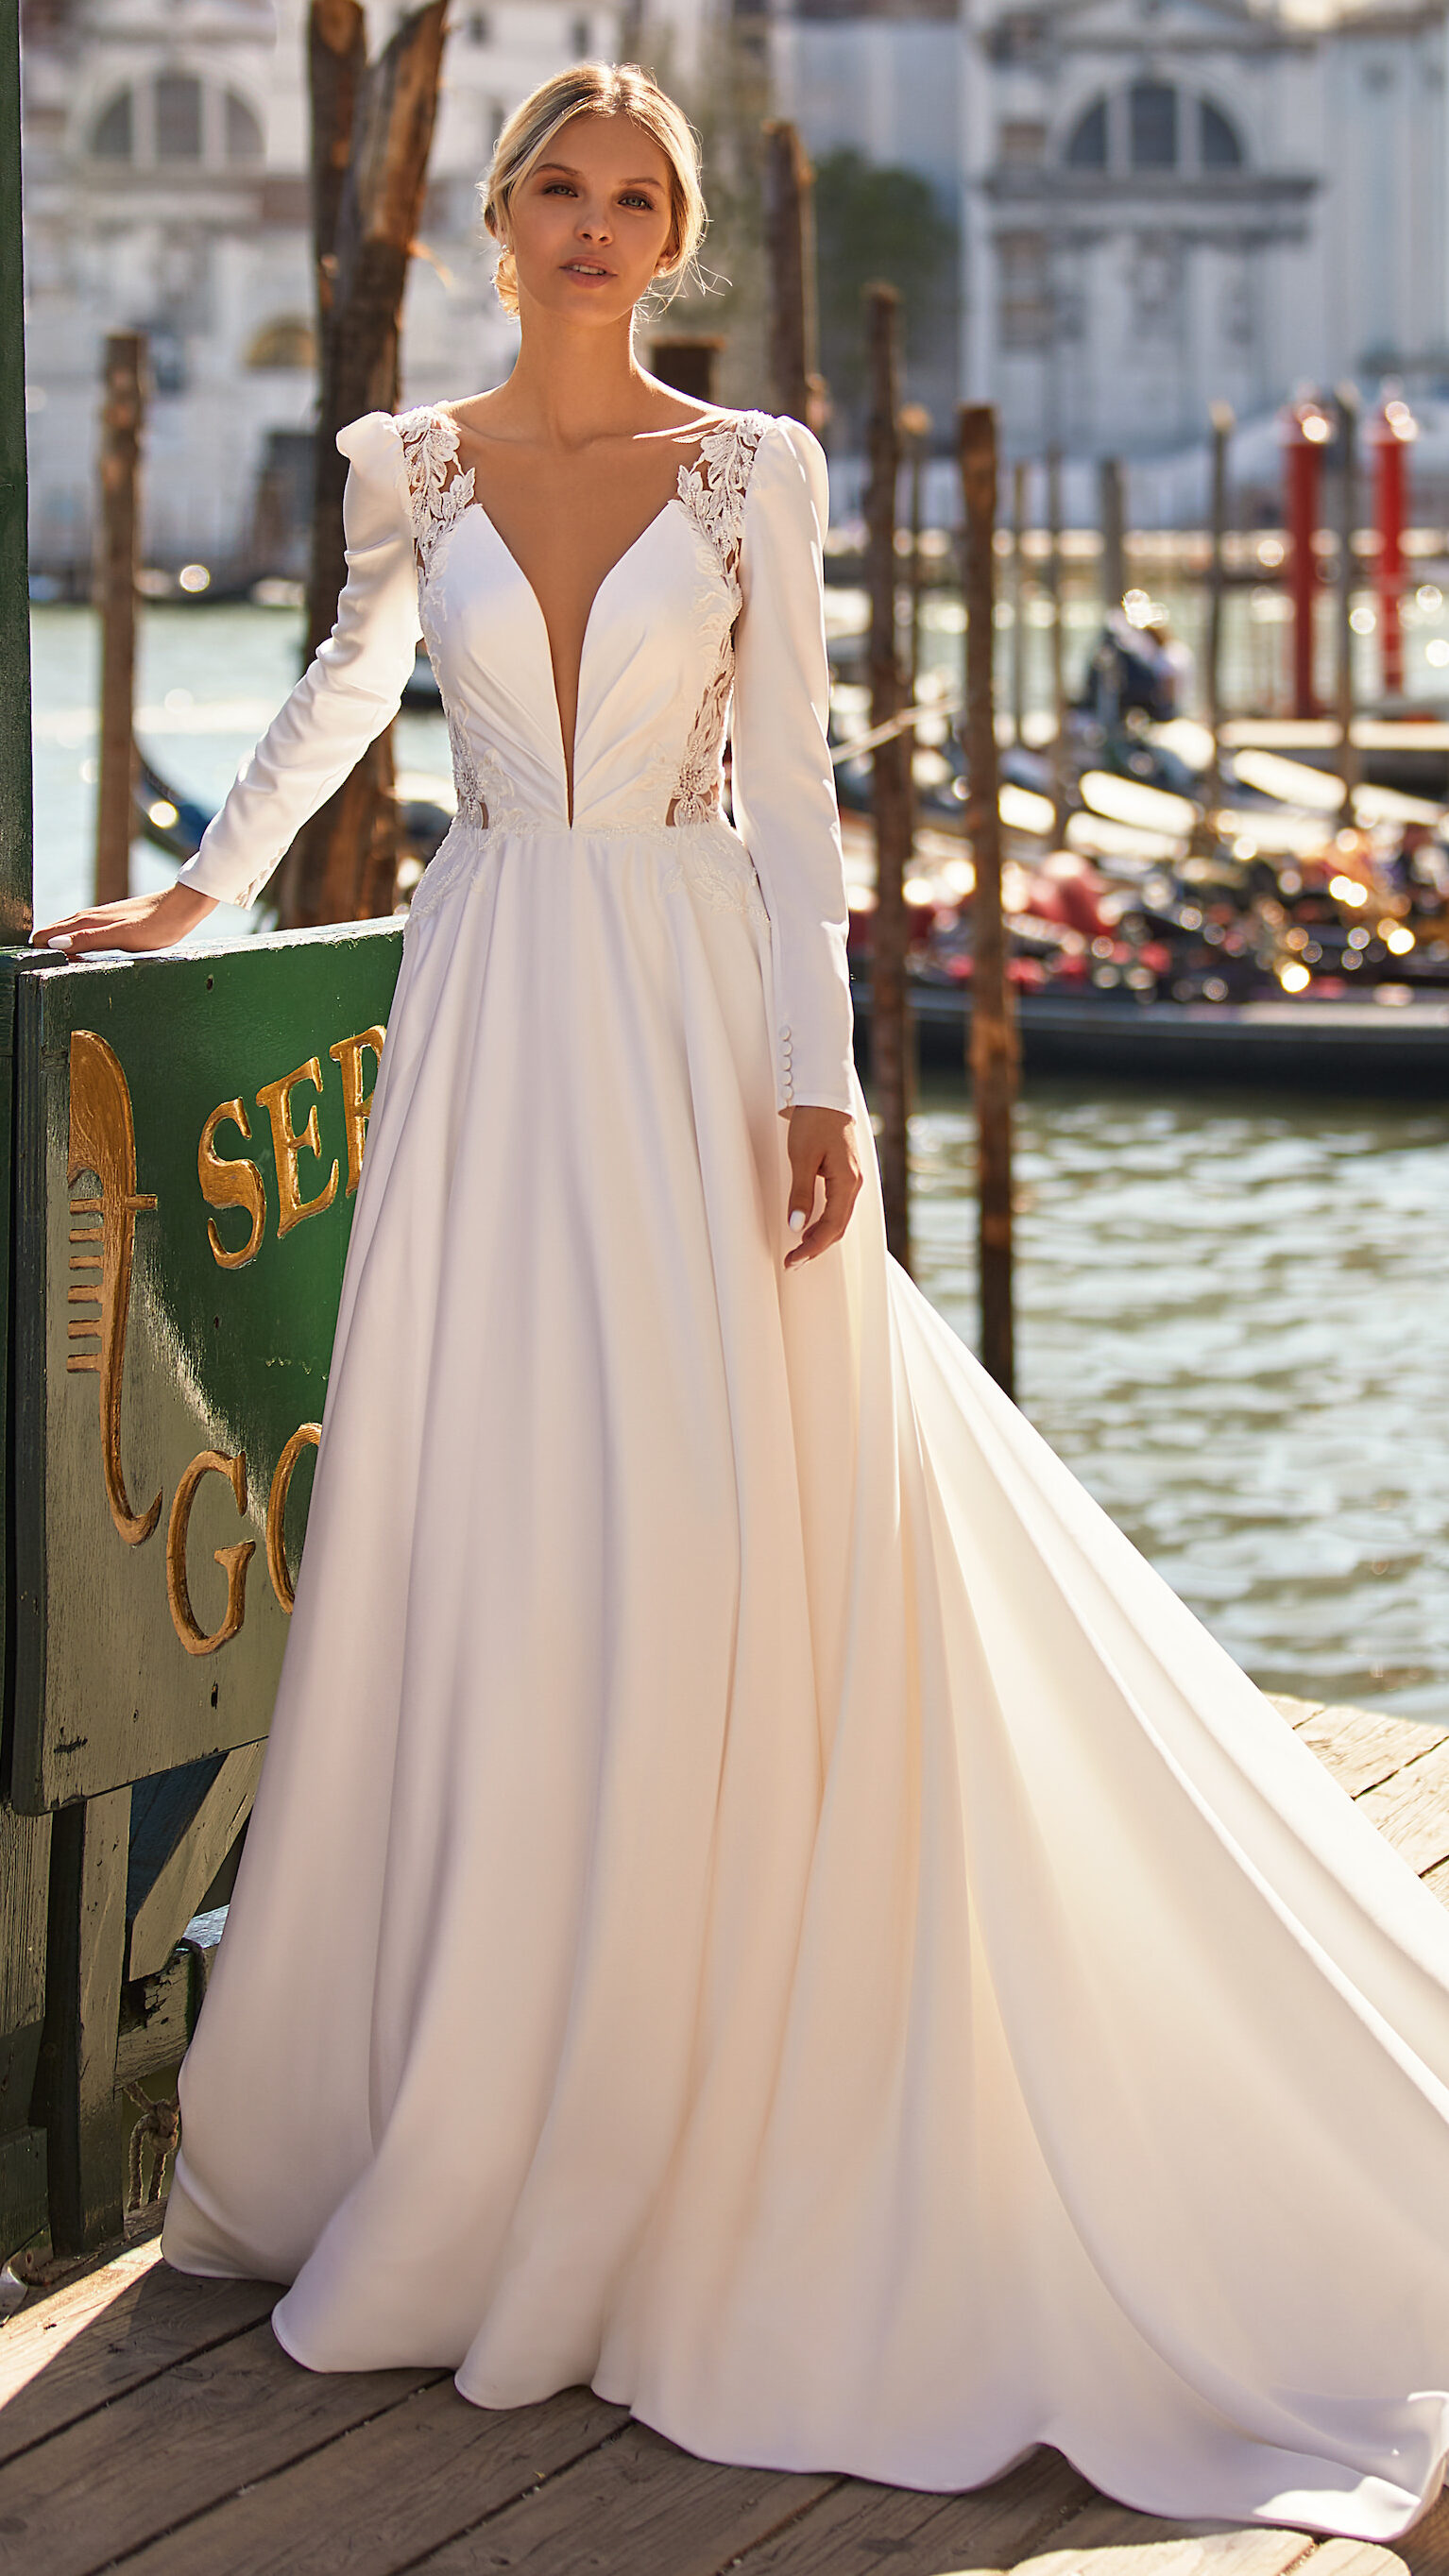 Amber by Katy Corso wedding dress